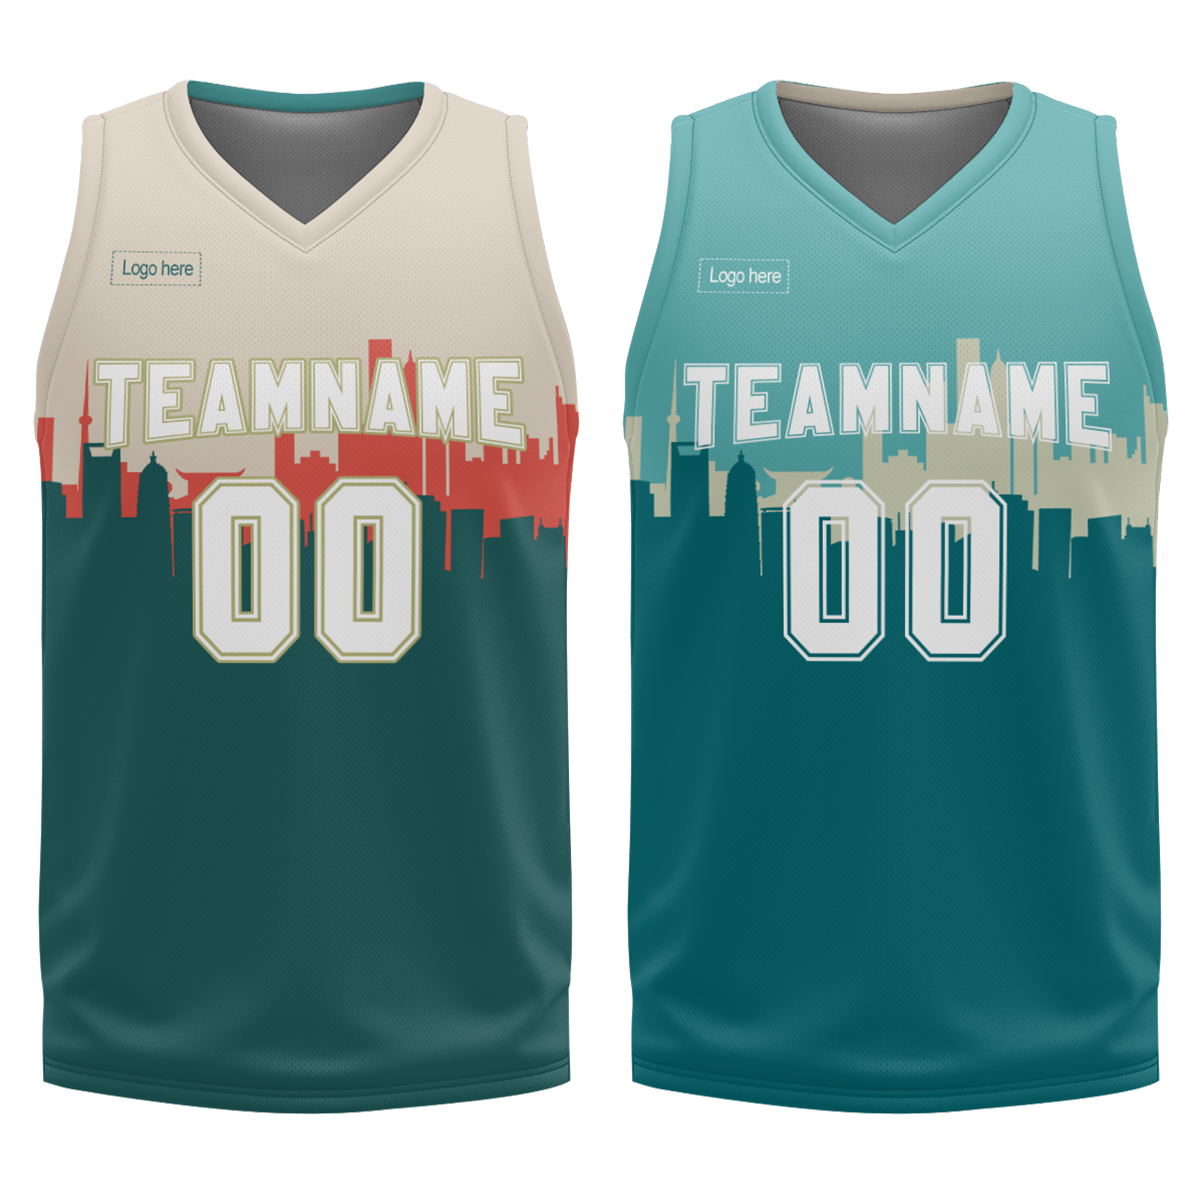 wholesale-factory-custom-blank-team-basketball-jerseys-for-printing-design-your-own-basketball-uniform-at-cj-pod-4